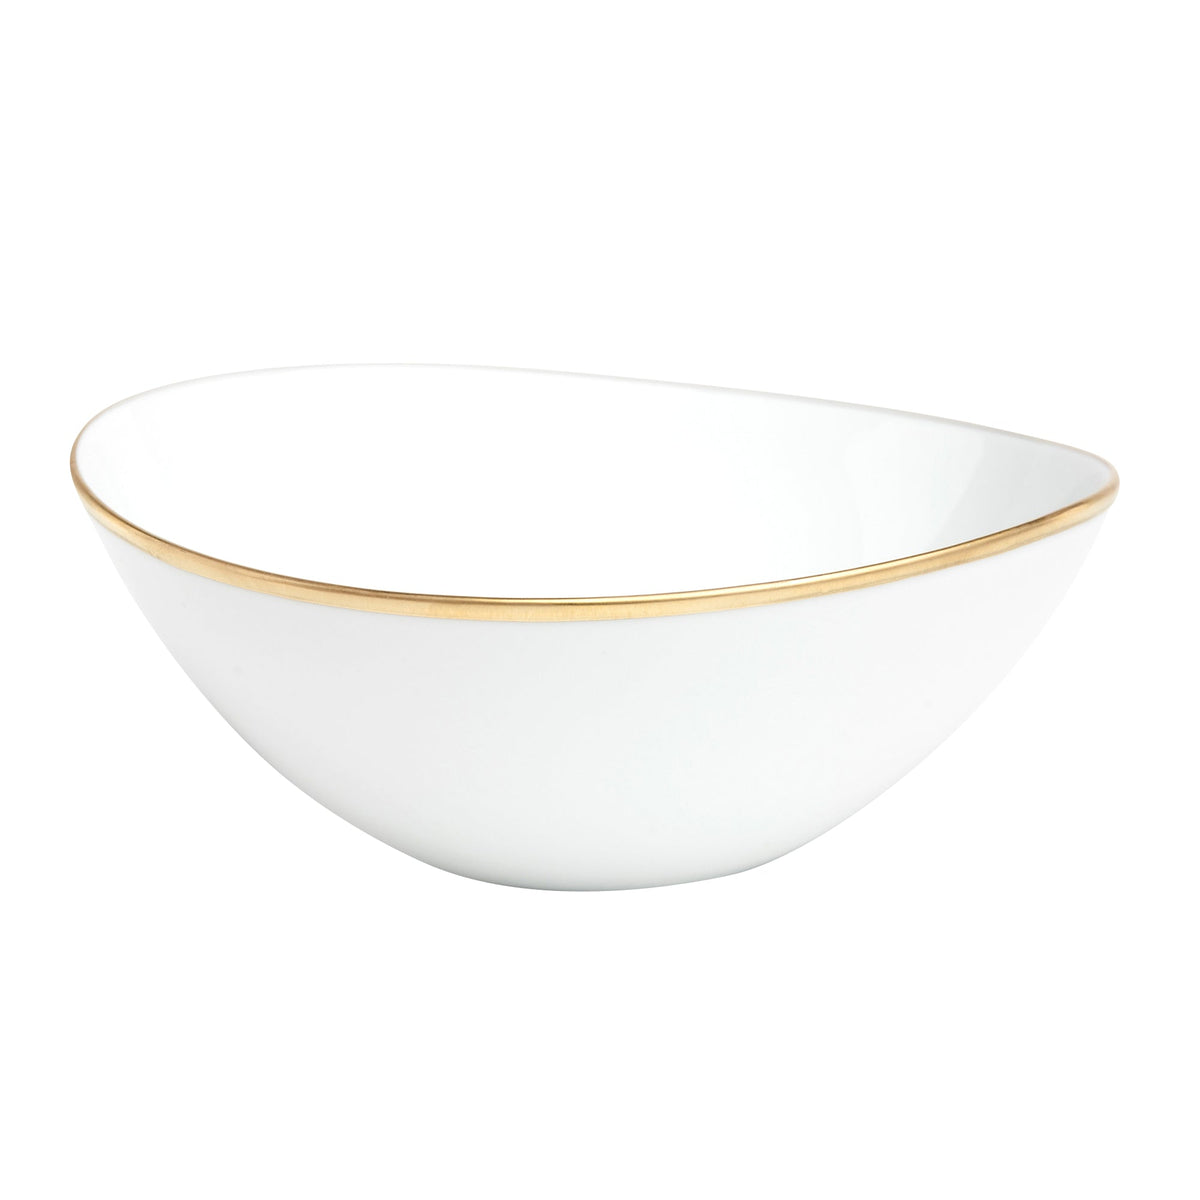 Simply Elegant Gold Bowl